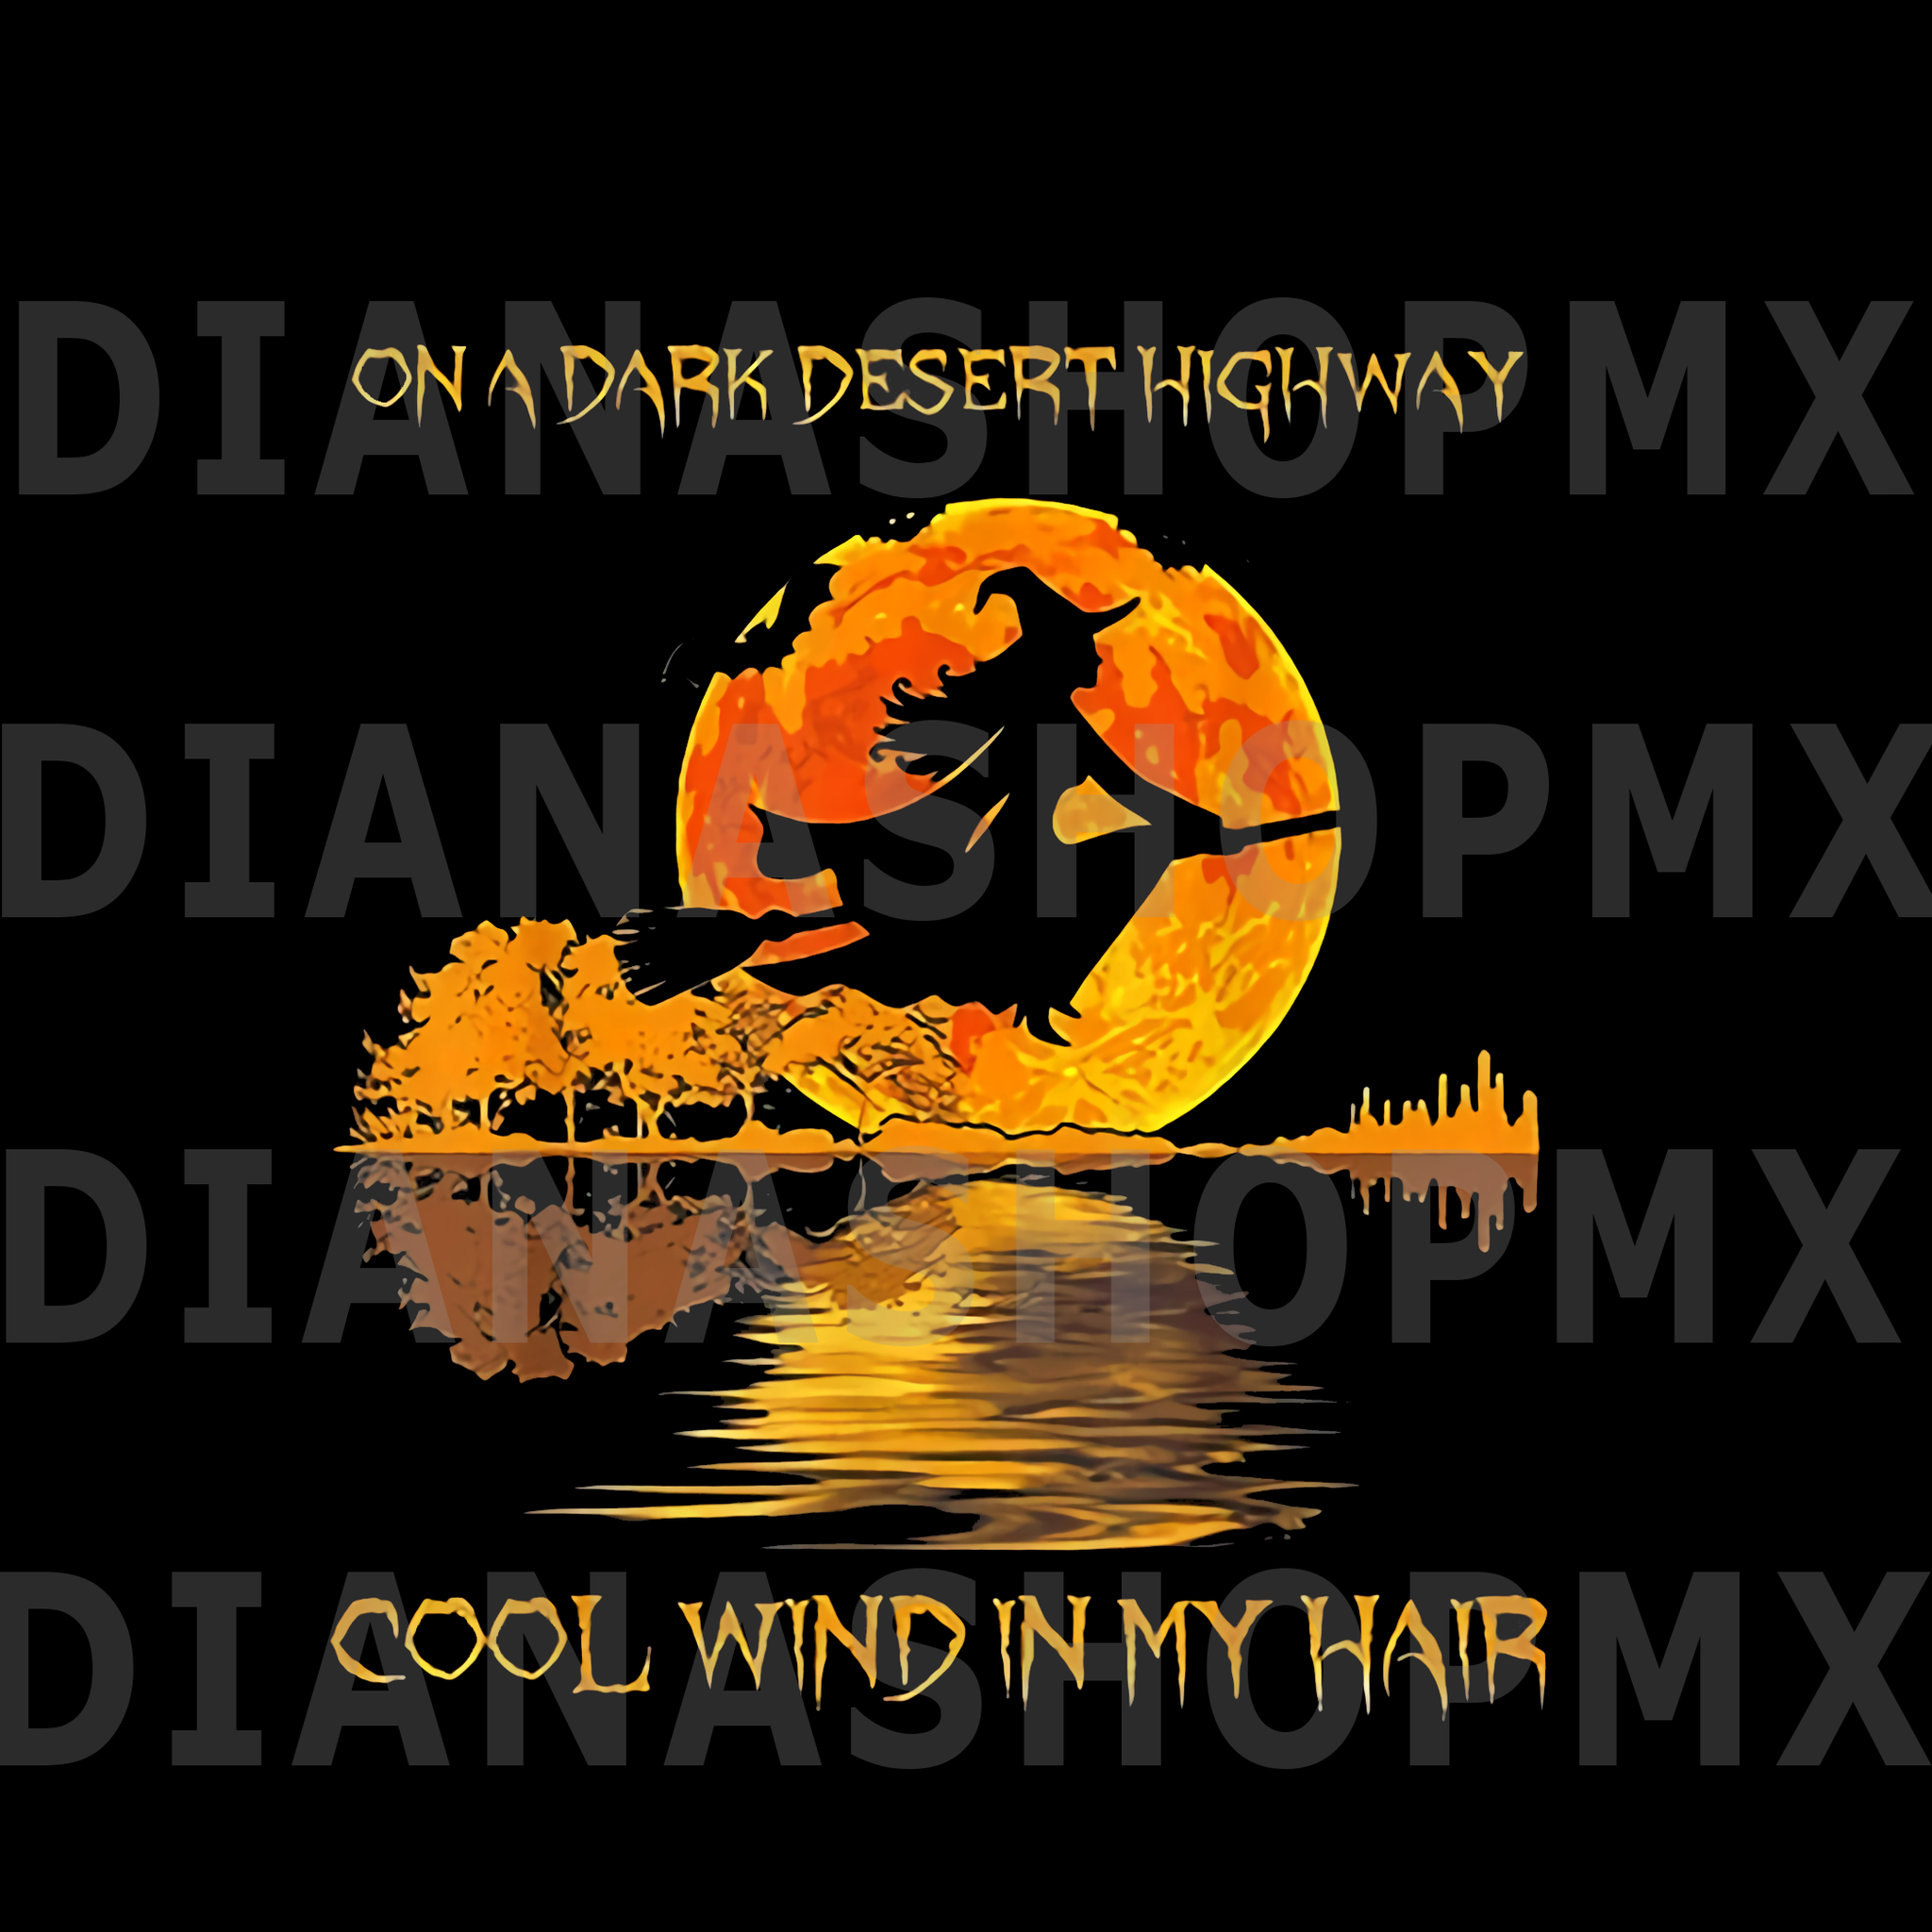 On a dark desert highway cool wind in my hair halloween Png,on a dark desert highway cool wind in my hair halloween,on a dark desert highway